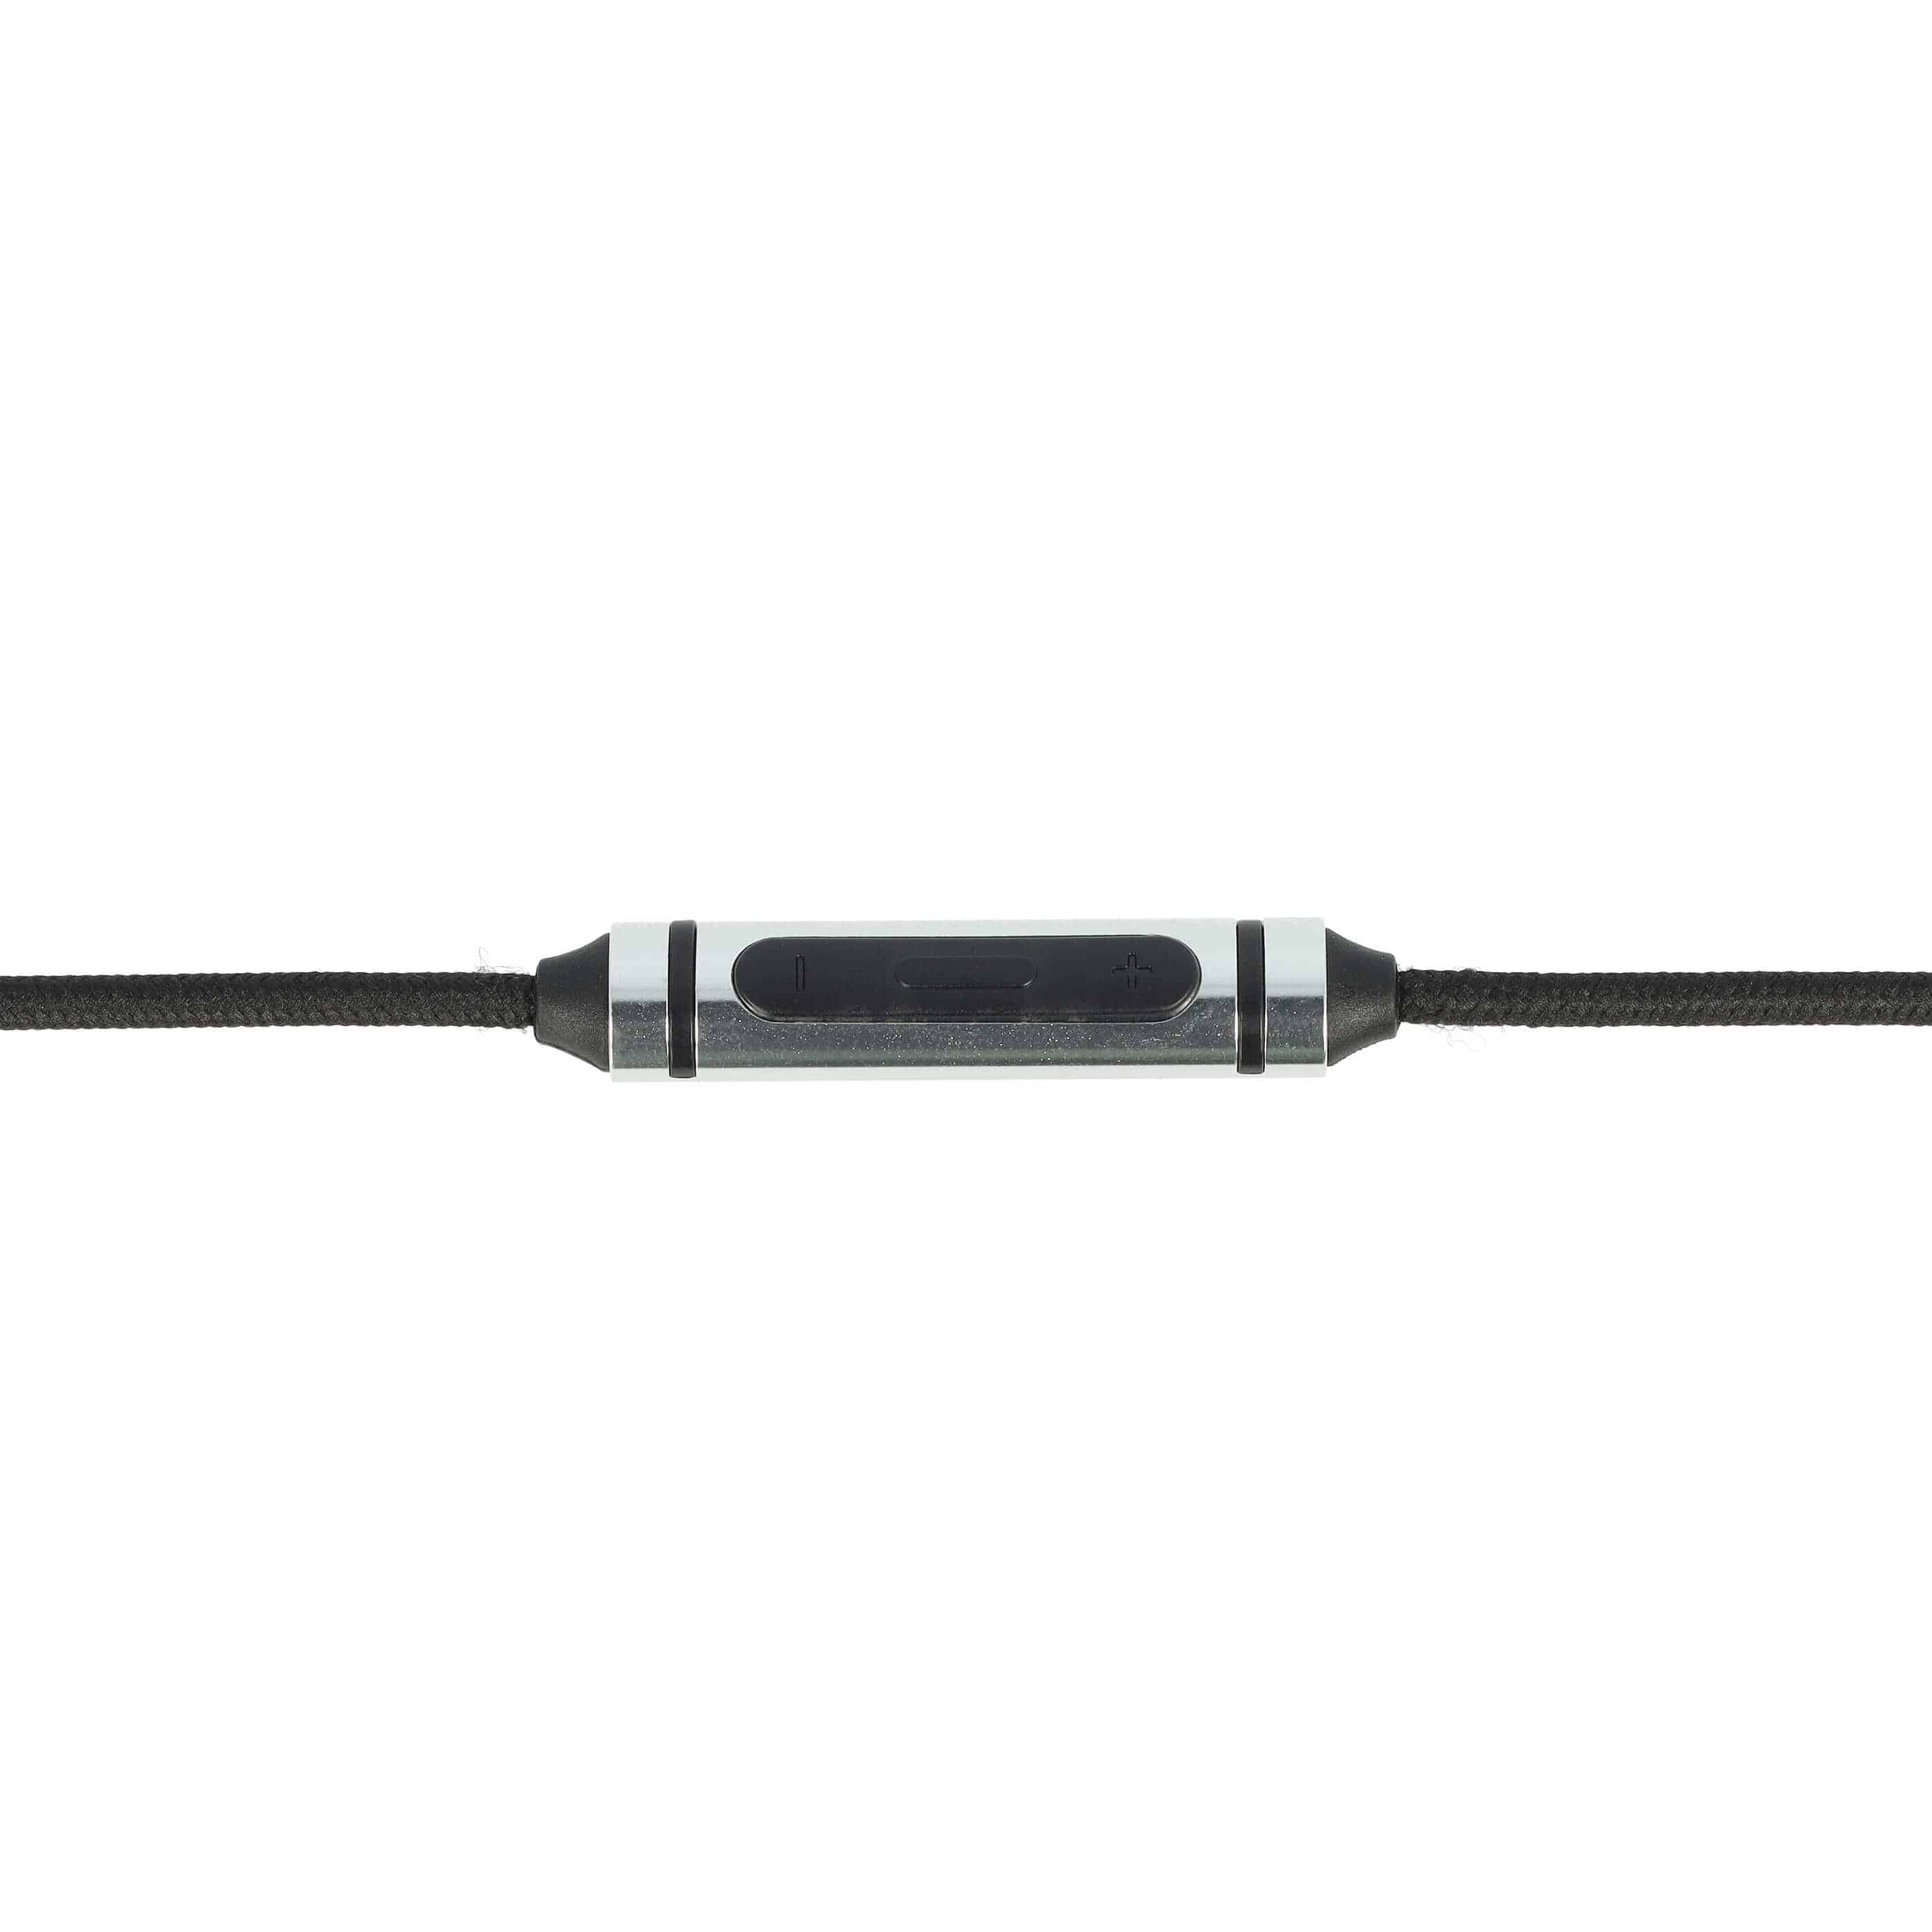 Headphones Cable suitable for AKG / Sennheiser / Bose Y40 etc., 150 cm